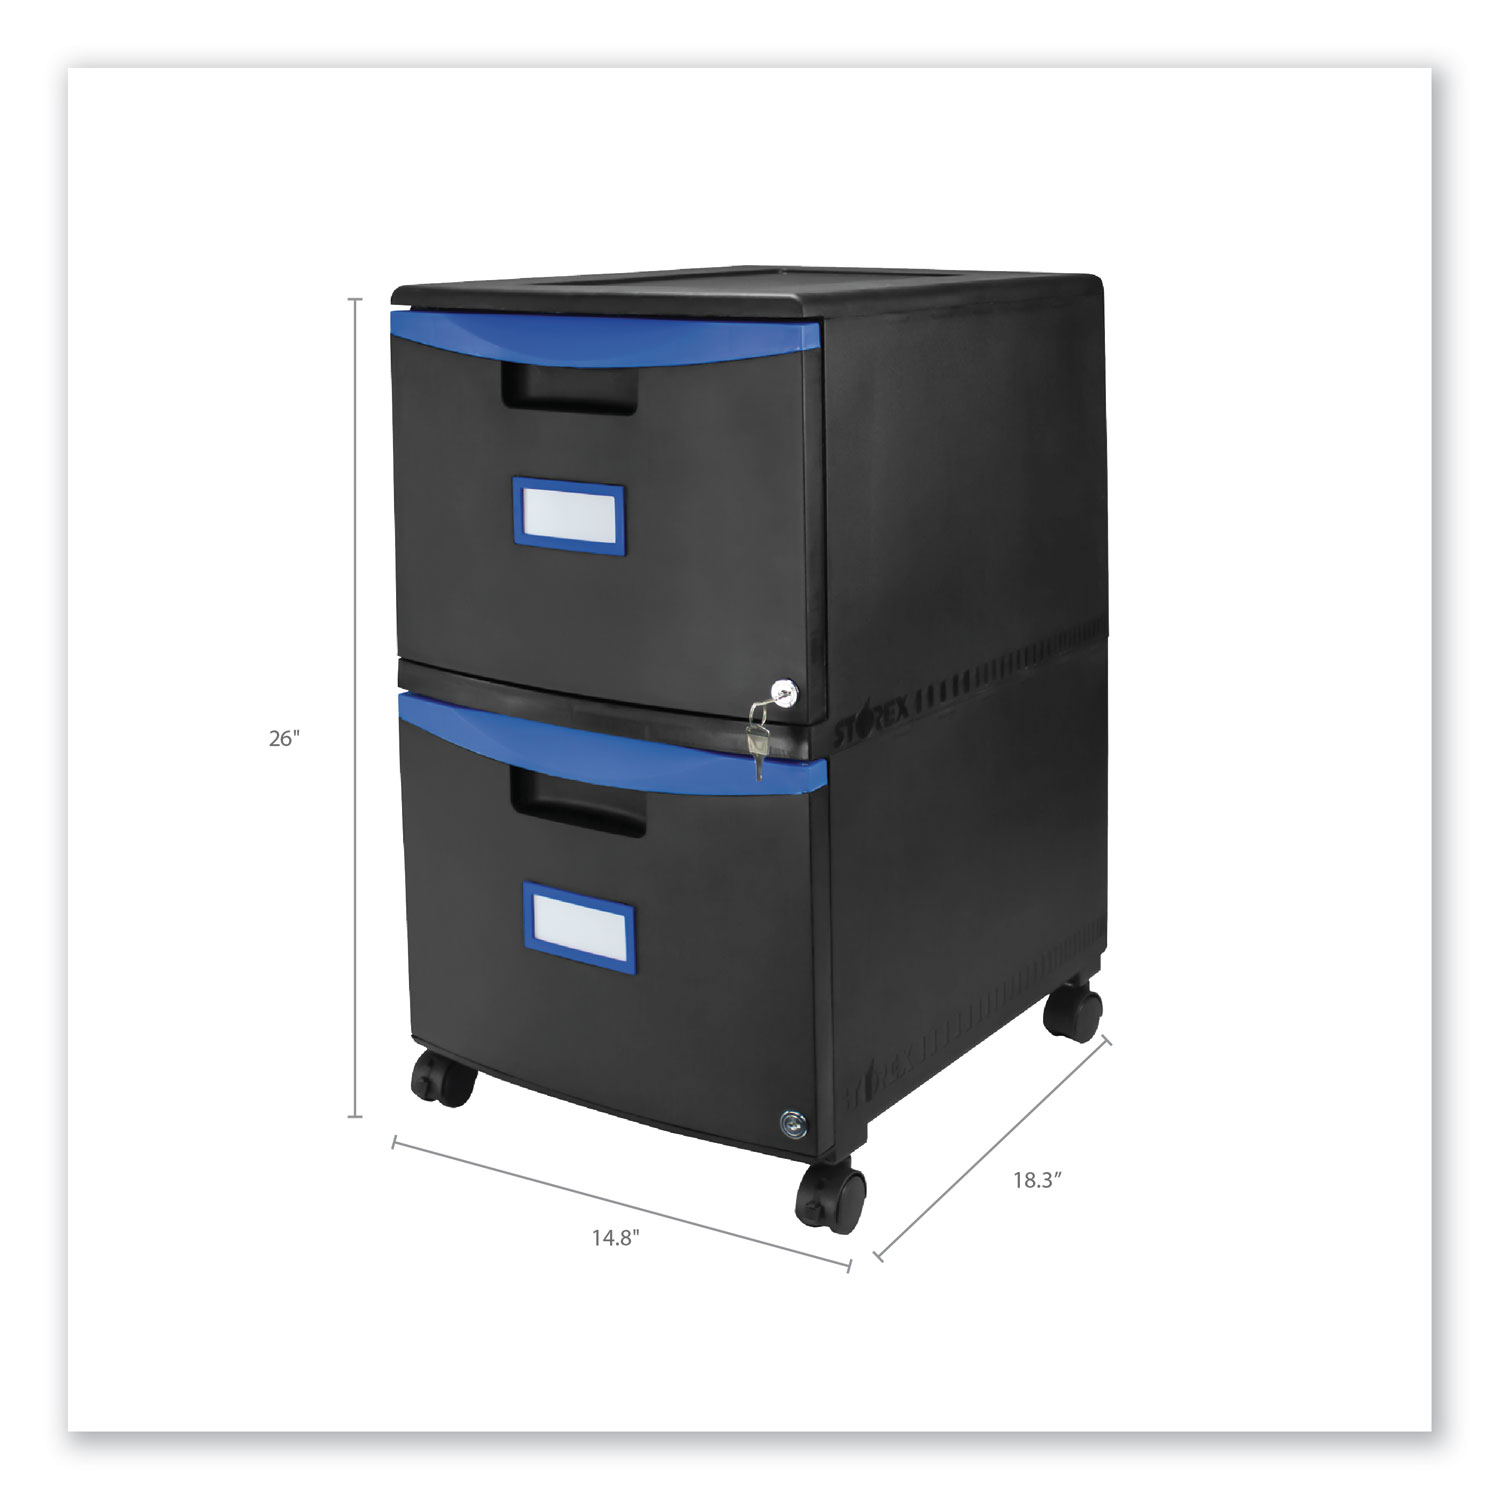 Storex 2-Drawer Mobile File Cabinet with Lock, Legal/Letter, Black